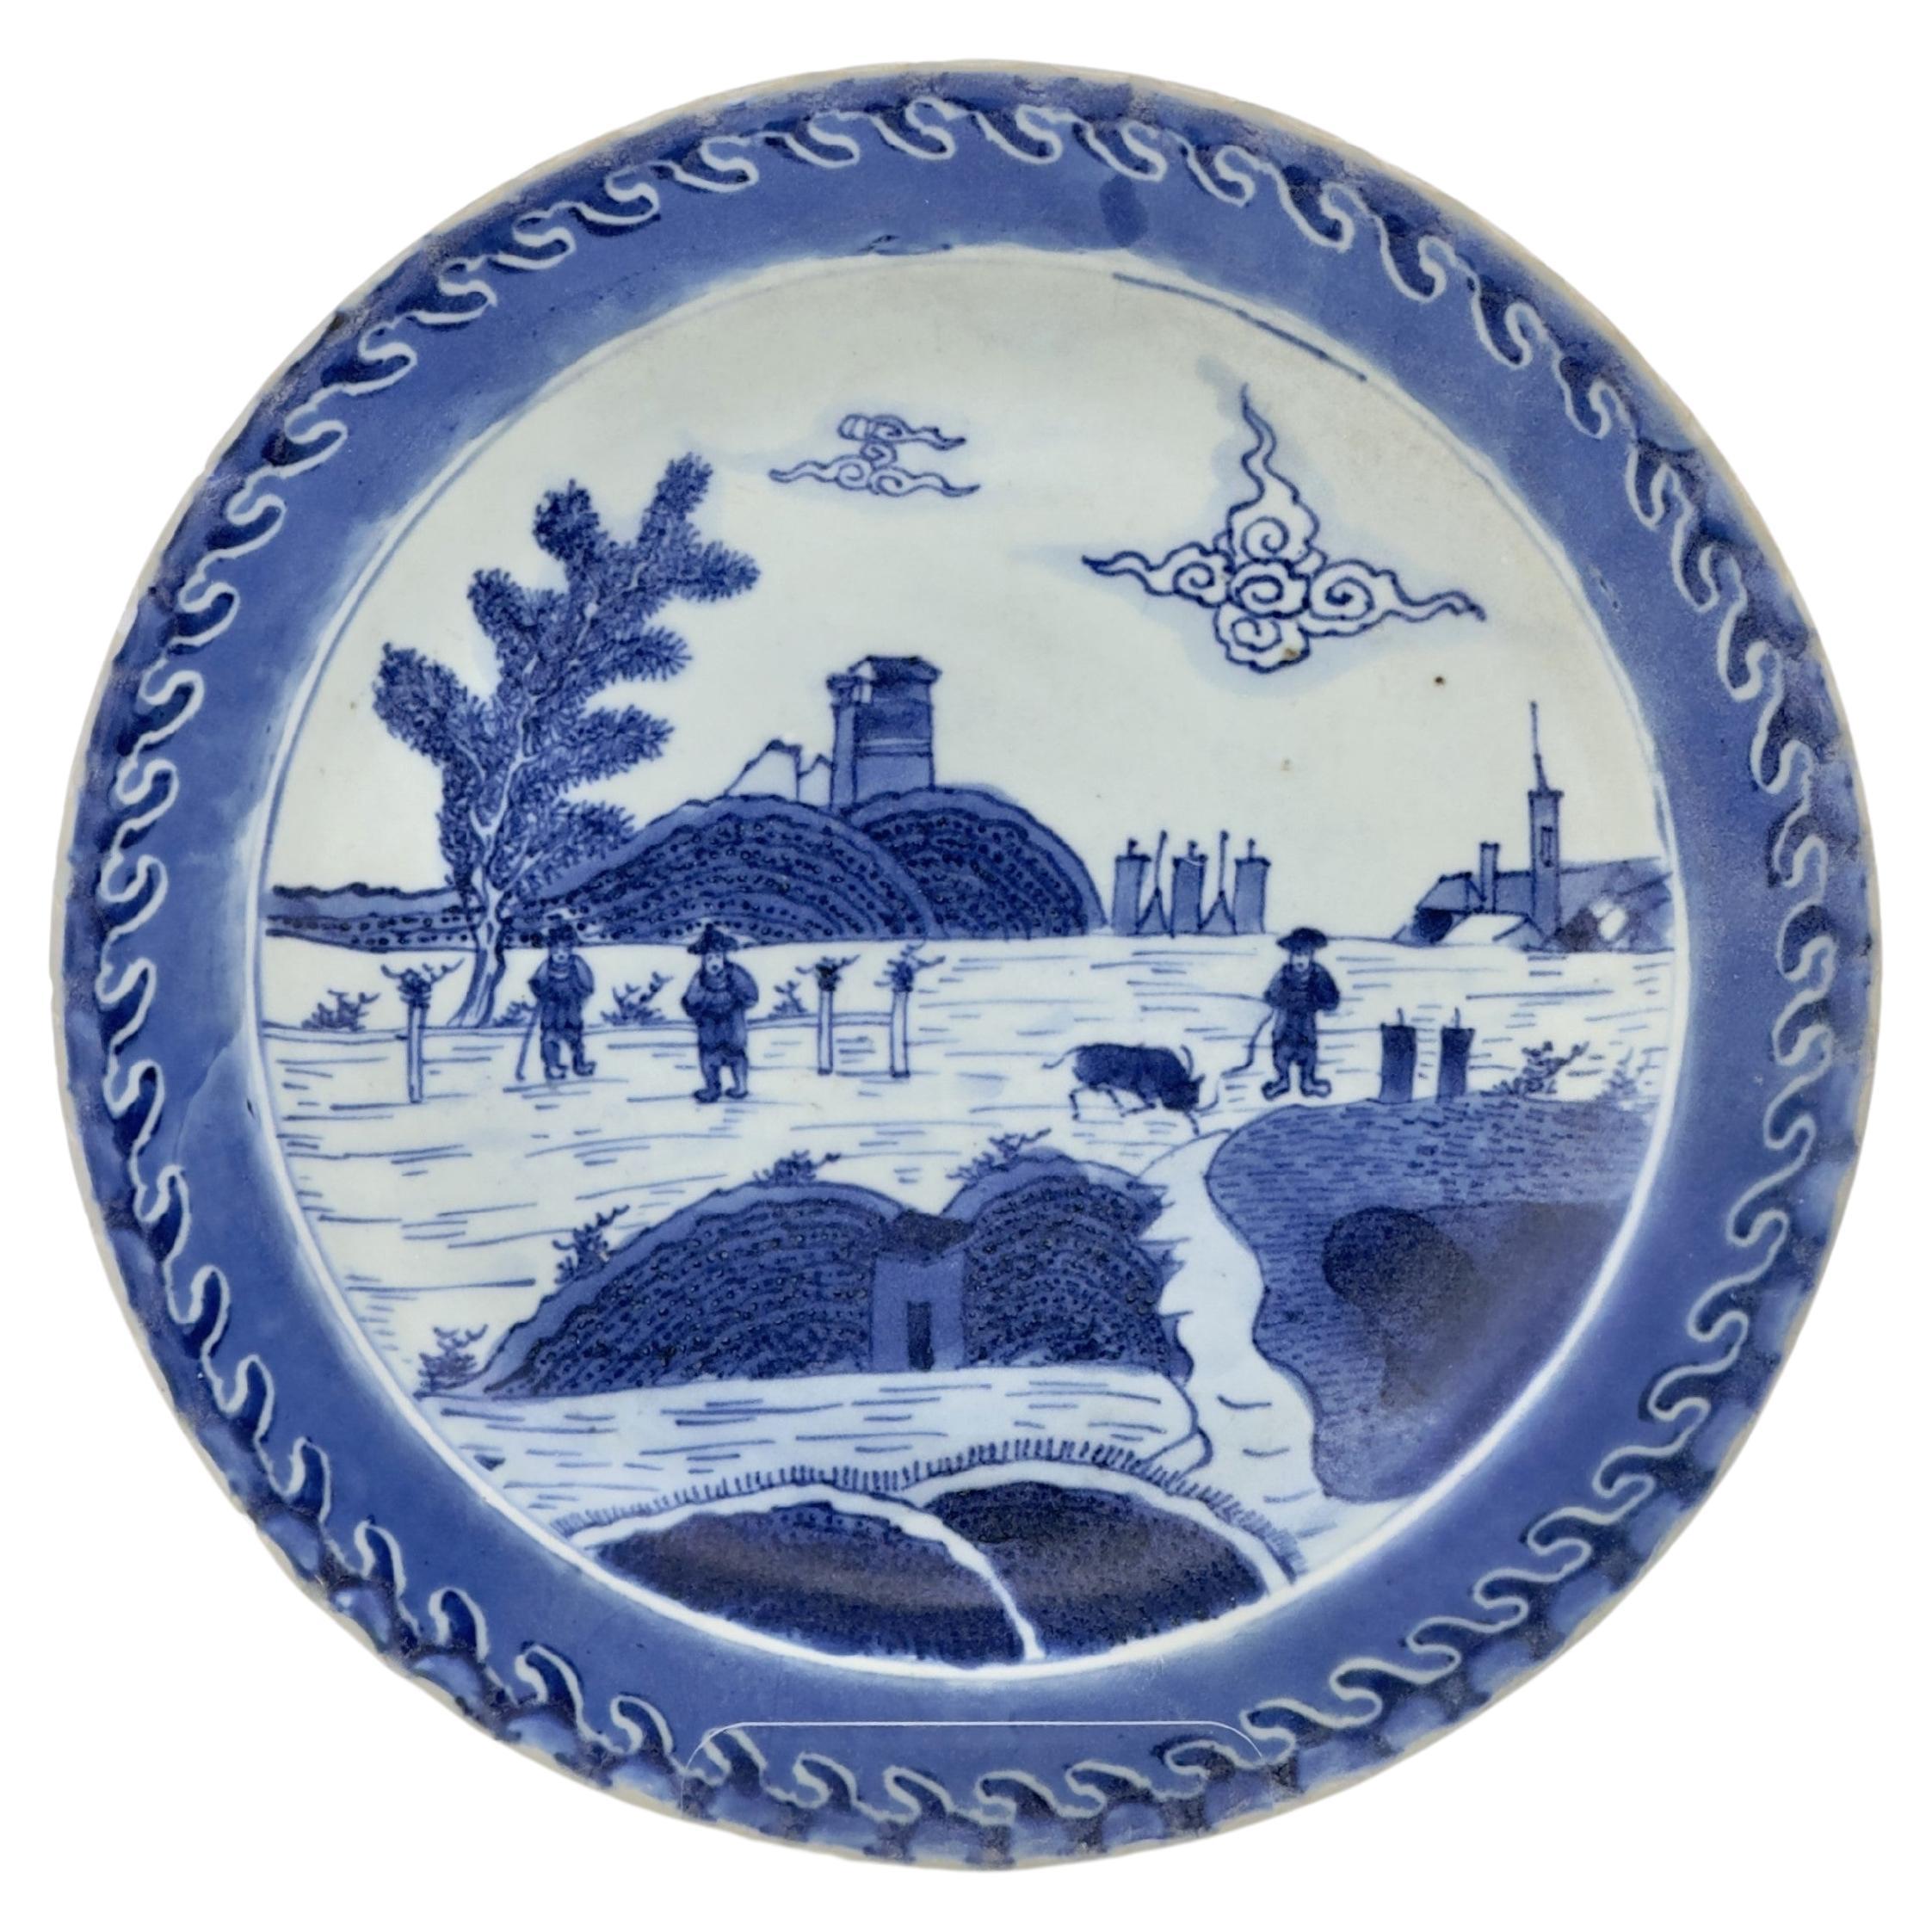  'Deshima Island' Pattern Blue and White dish c1725, Qing Dynasty, Yongzheng Era For Sale